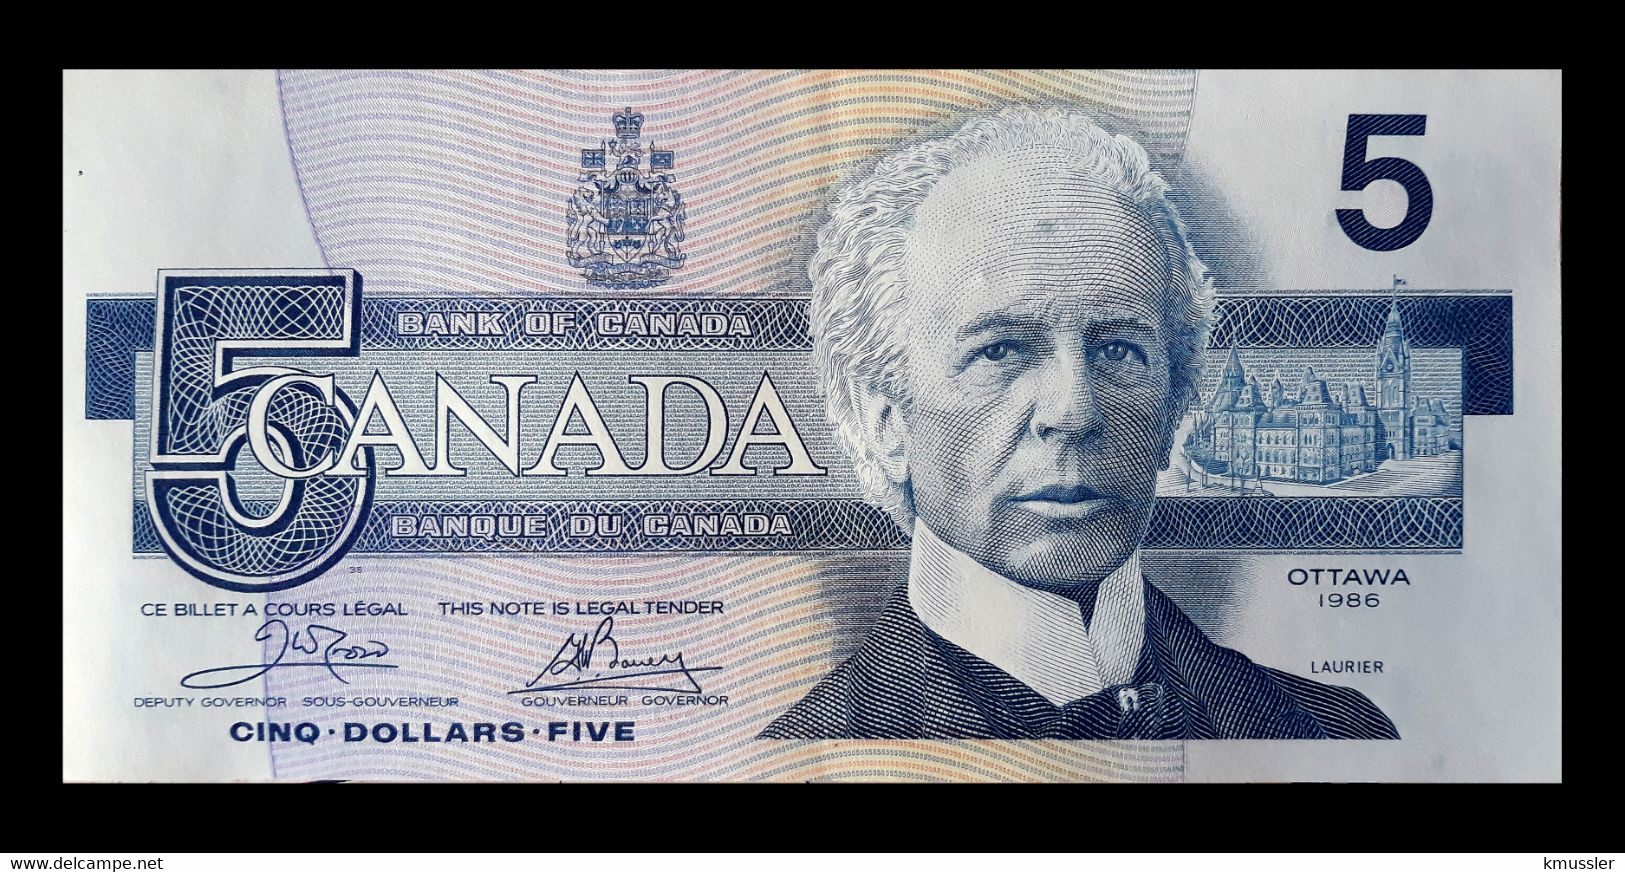 # # # Banknote Kanada (Canada) 5 Dollars 1986 UNC # # # - Canada